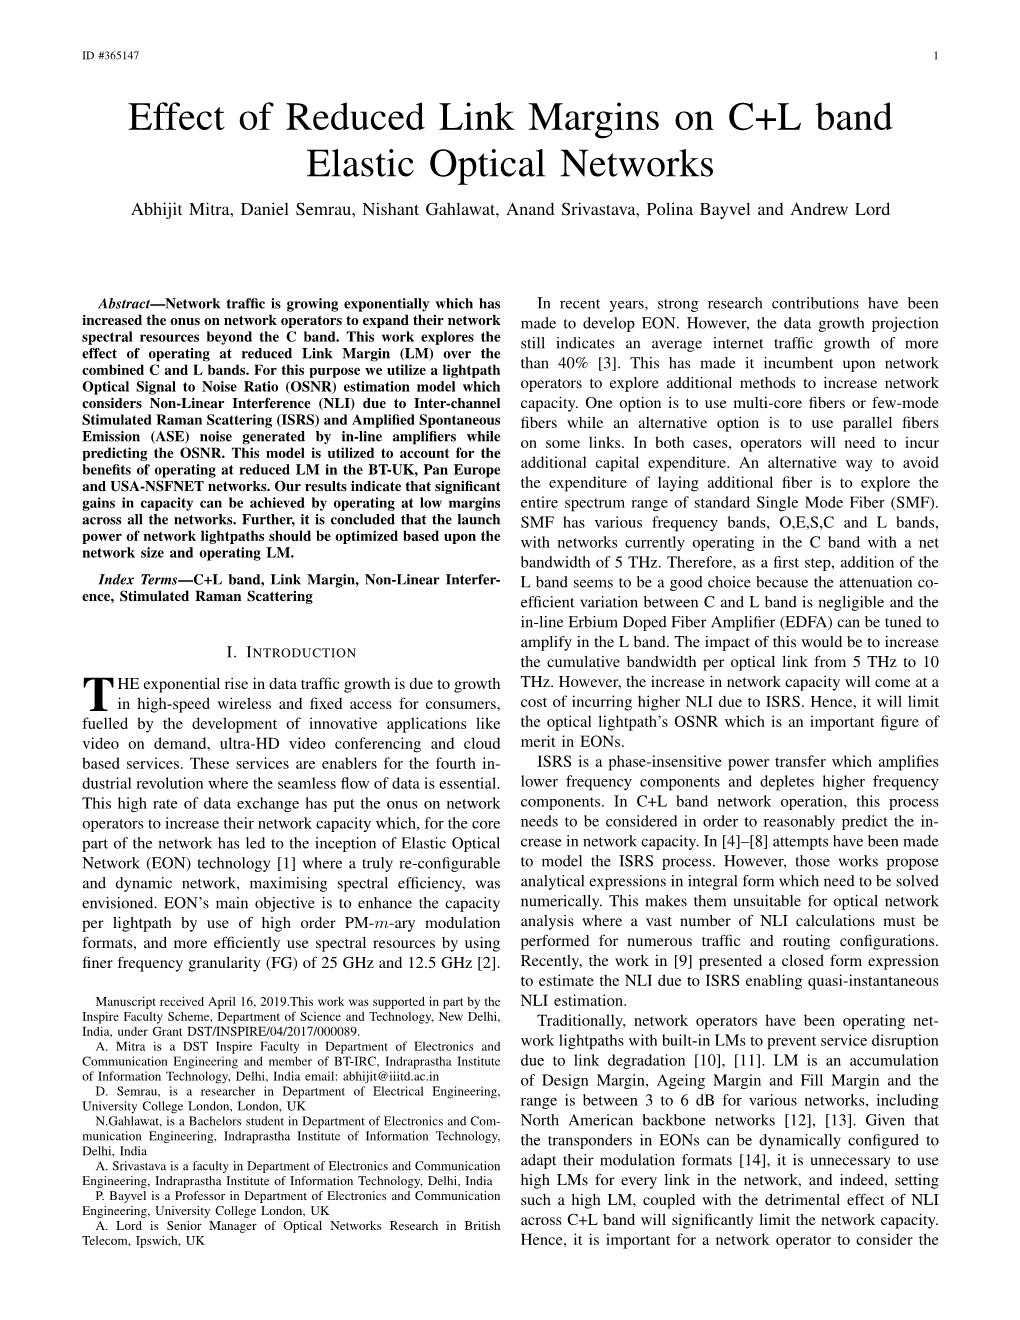 Effect of Reduced Link Margins on C+L Band Elastic Optical Networks Abhijit Mitra, Daniel Semrau, Nishant Gahlawat, Anand Srivastava, Polina Bayvel and Andrew Lord